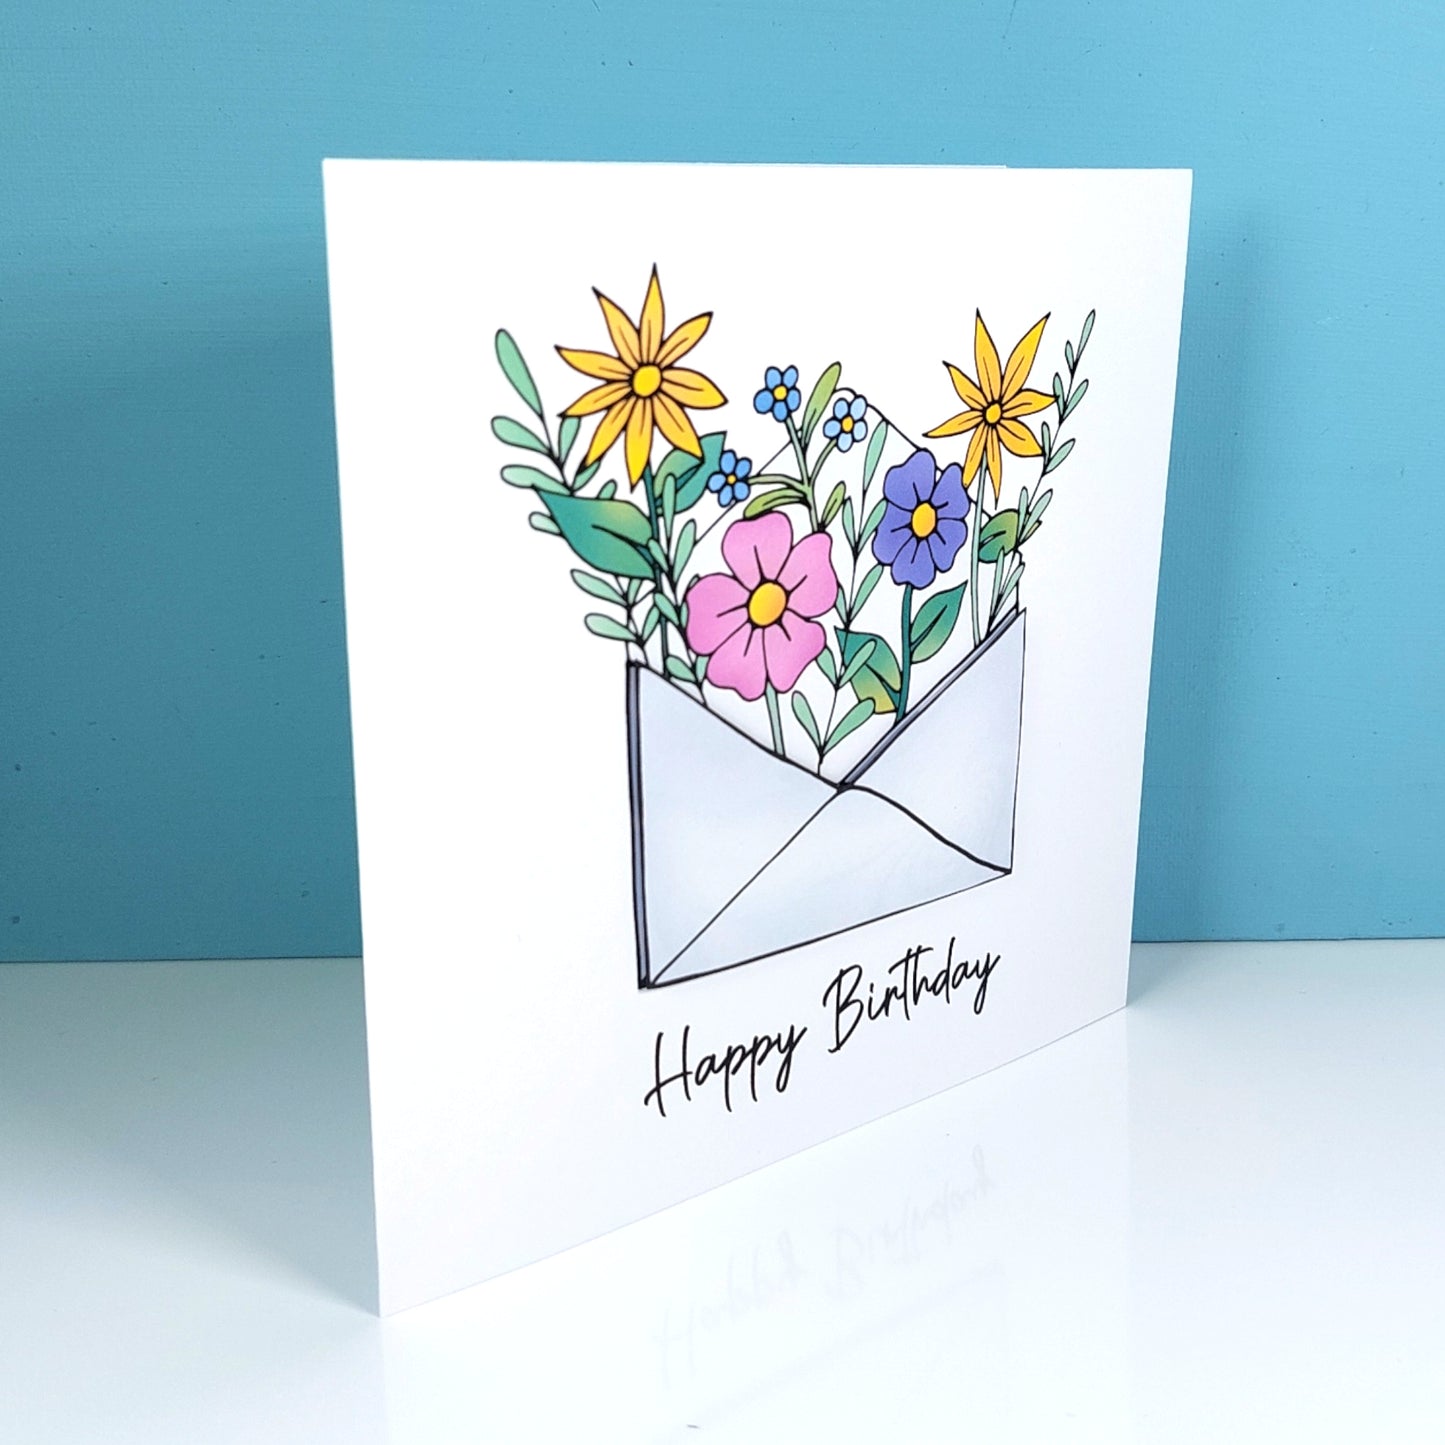 Flower Envelope Birthday Card